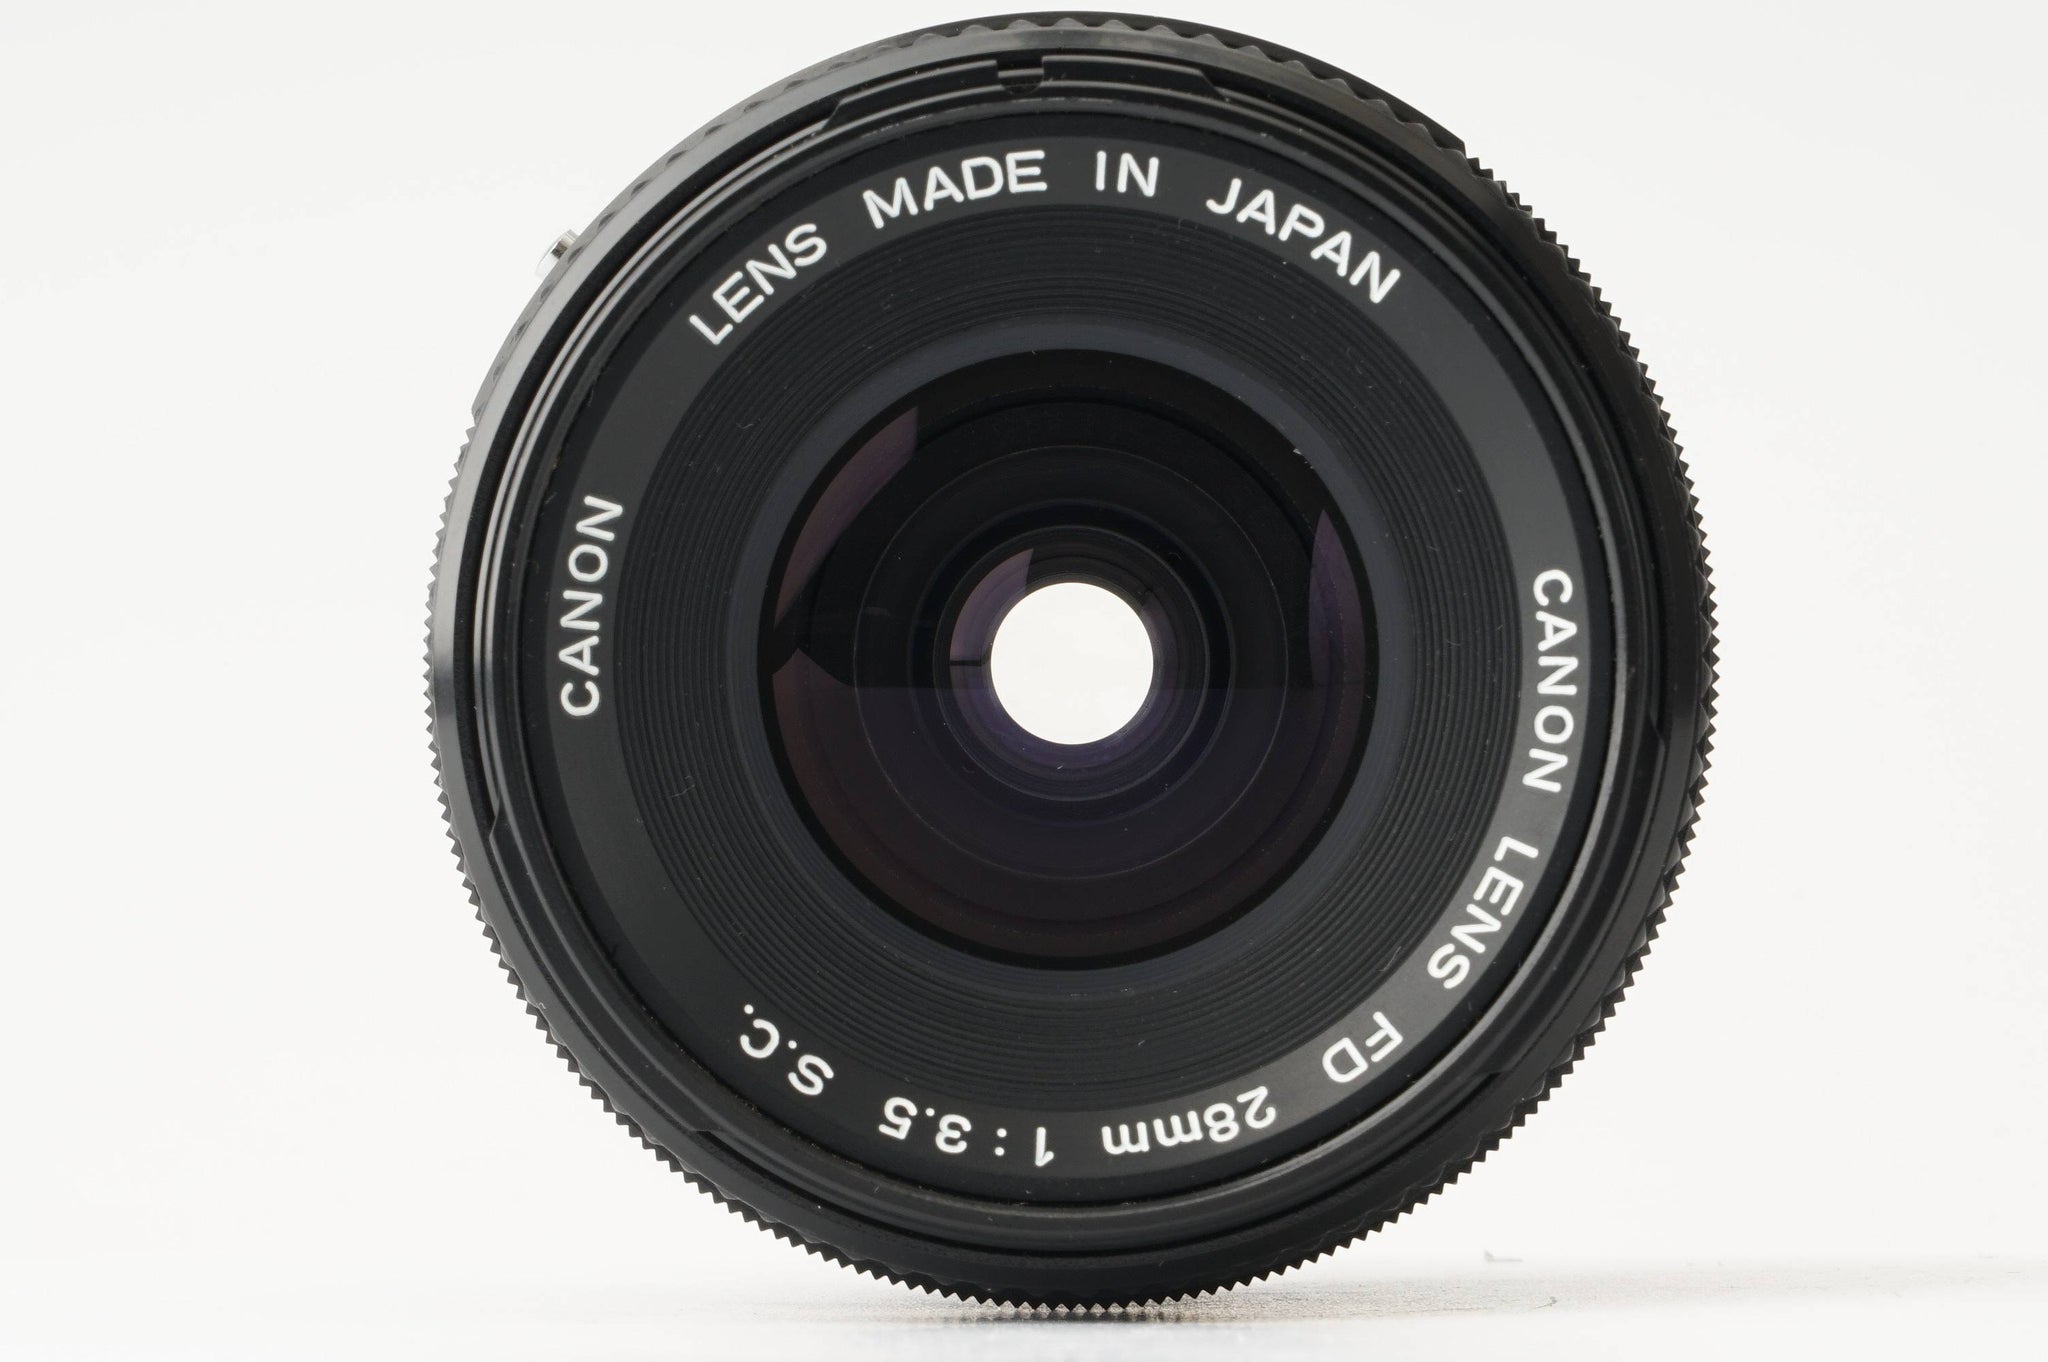 Canon キヤノン FD 28mm f3.5 S.C.